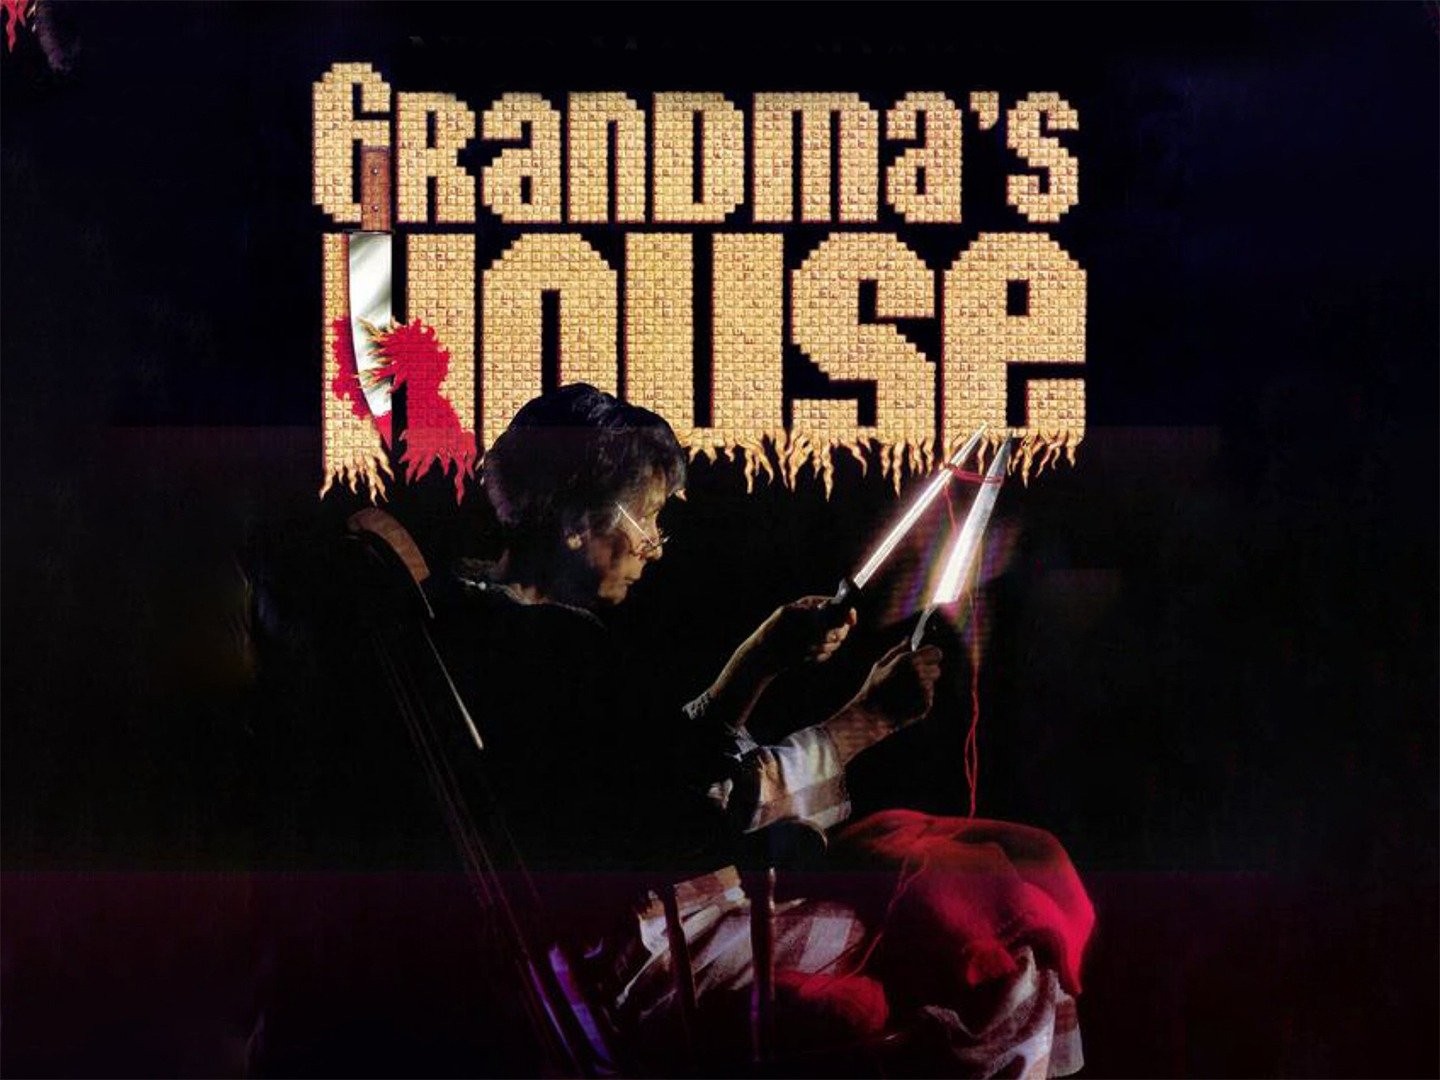 Watch 'Grandma's House' - aspireTV Movie